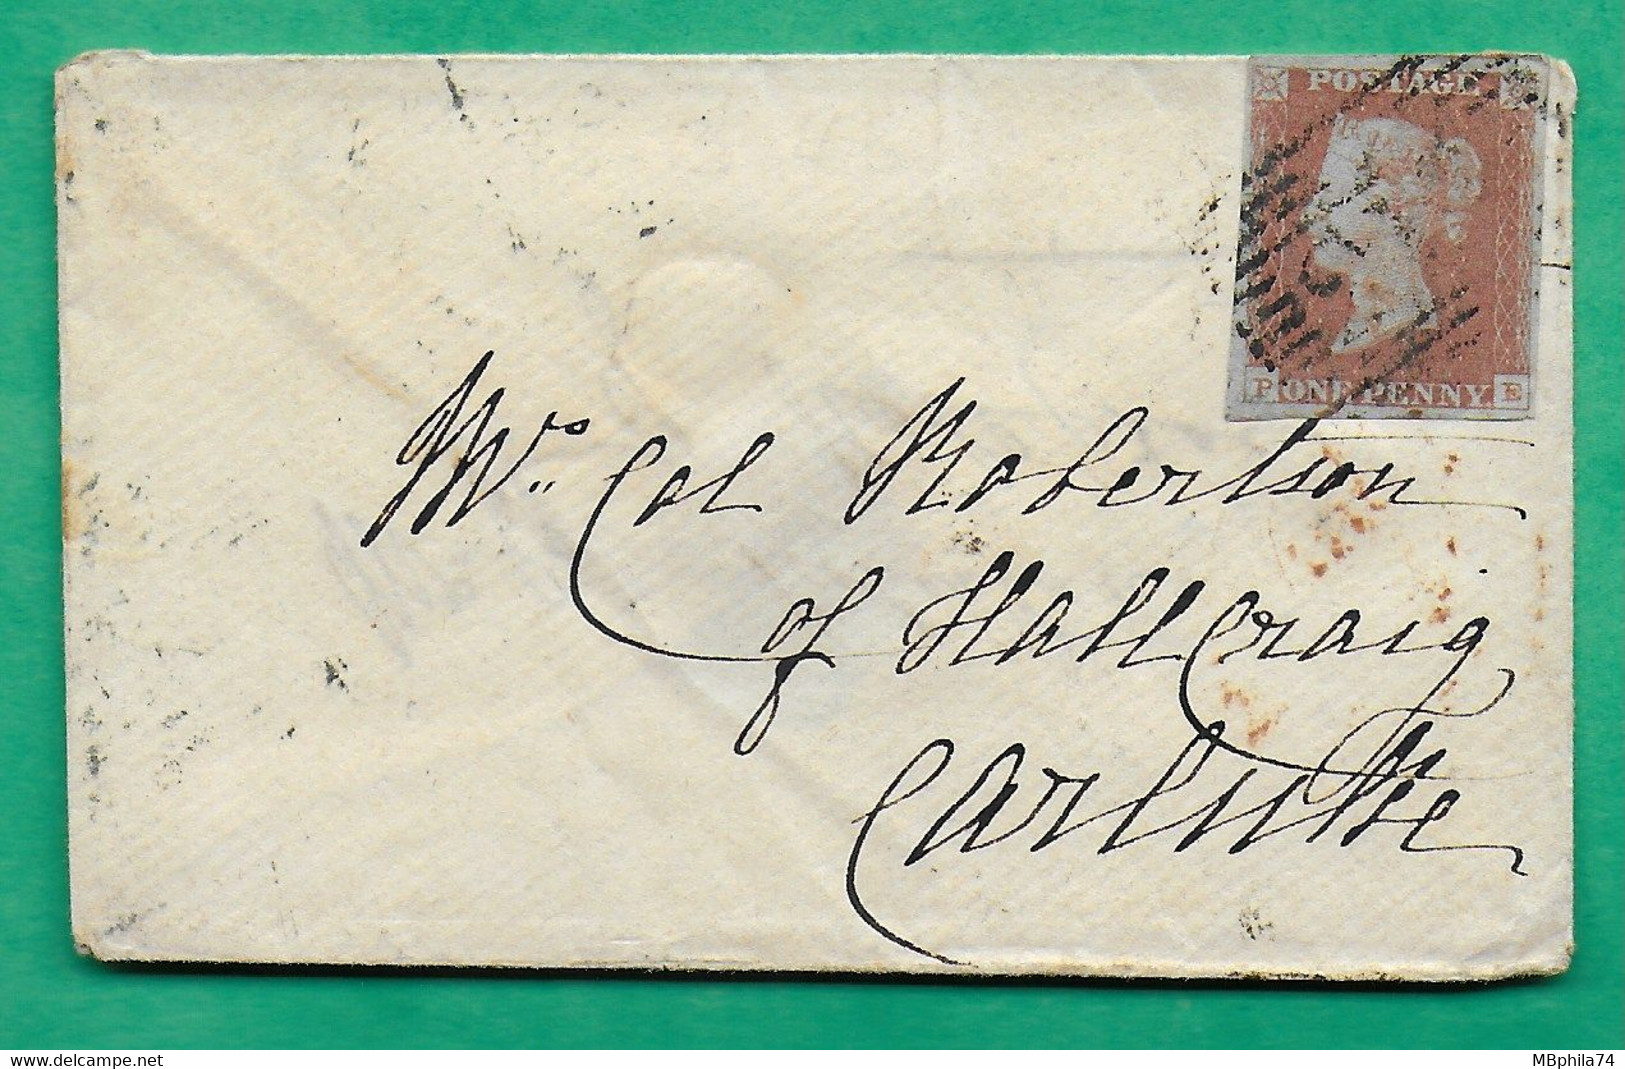 N°3 ONE PENNY RED VICTORIA HAMILTON ENGLAND FOR CARLISLE ? 1848 - Briefe U. Dokumente